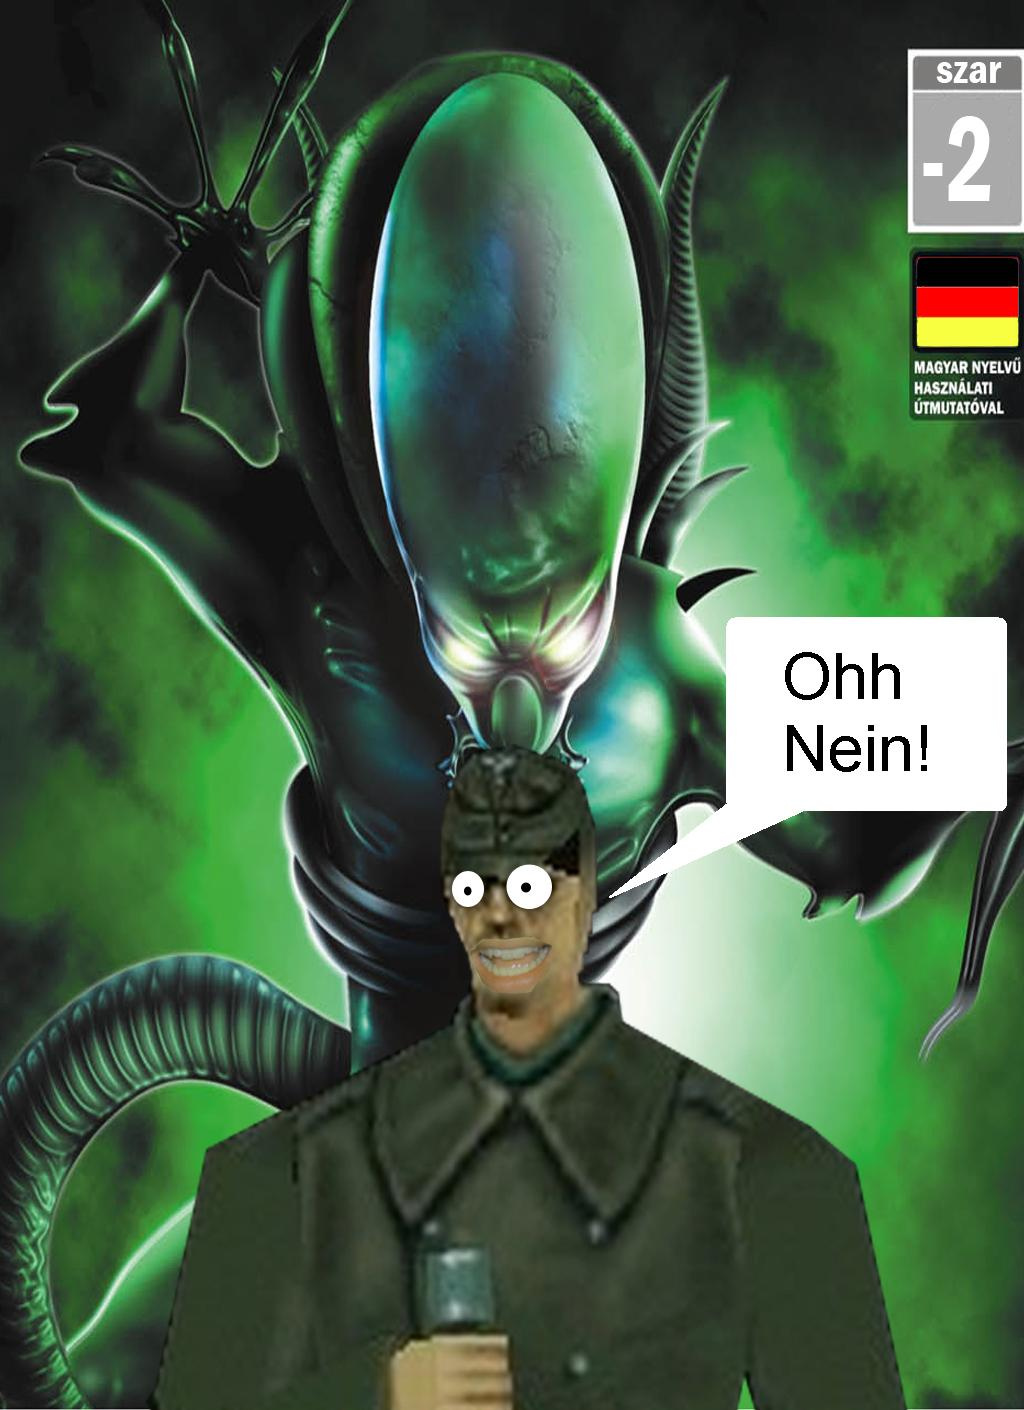 Günther meets Alien